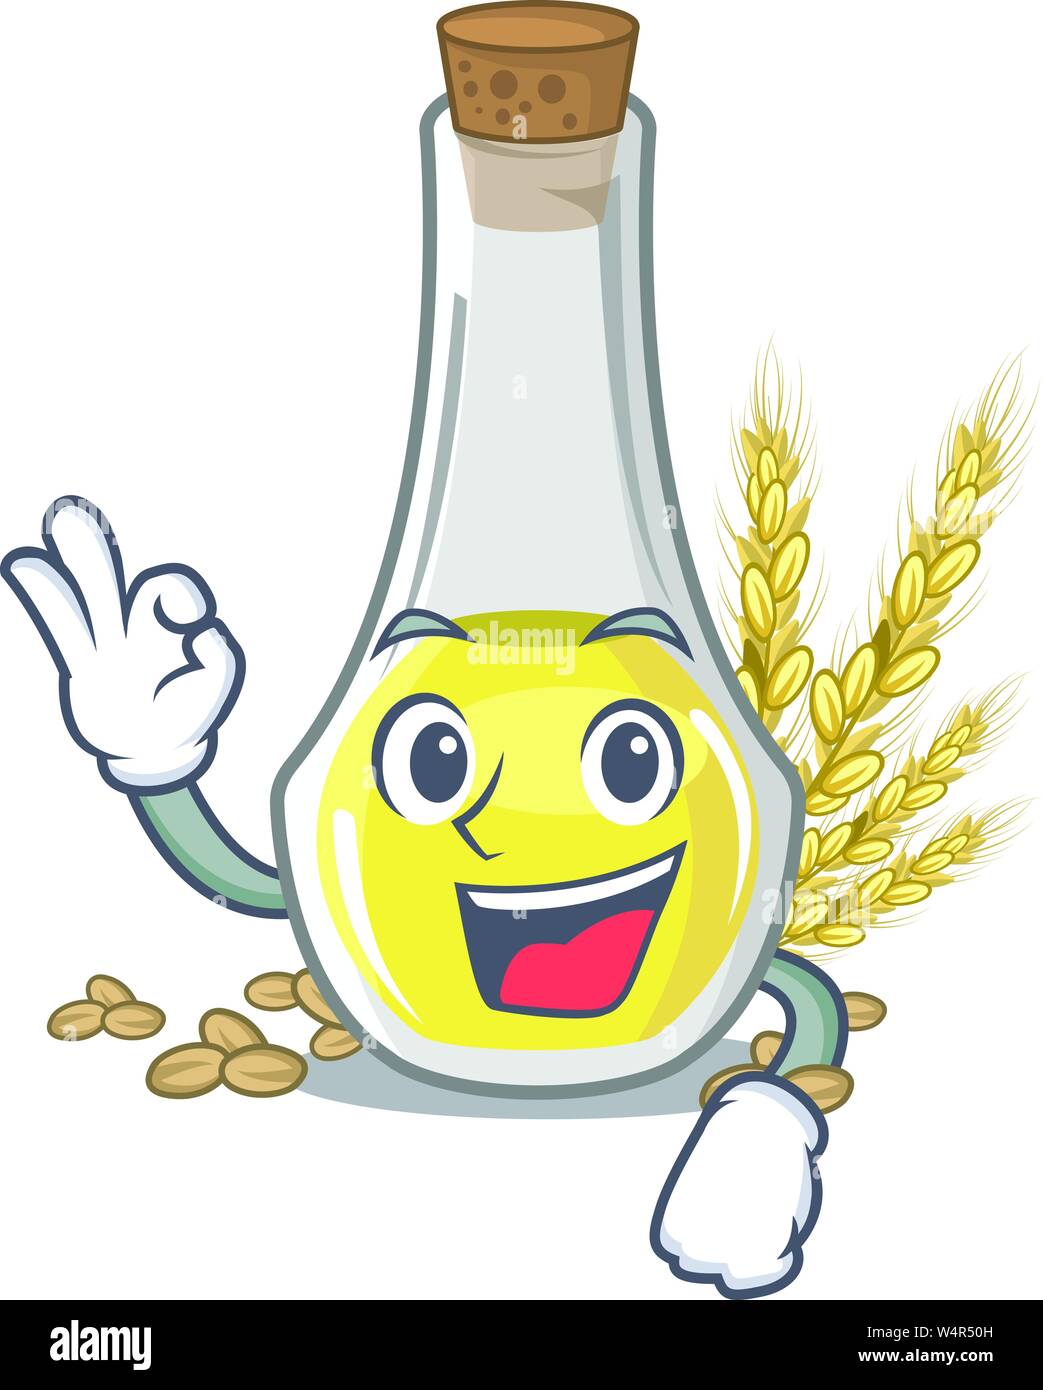 Okay wheat germ oil the mascot shape vector illustration Stock Vector